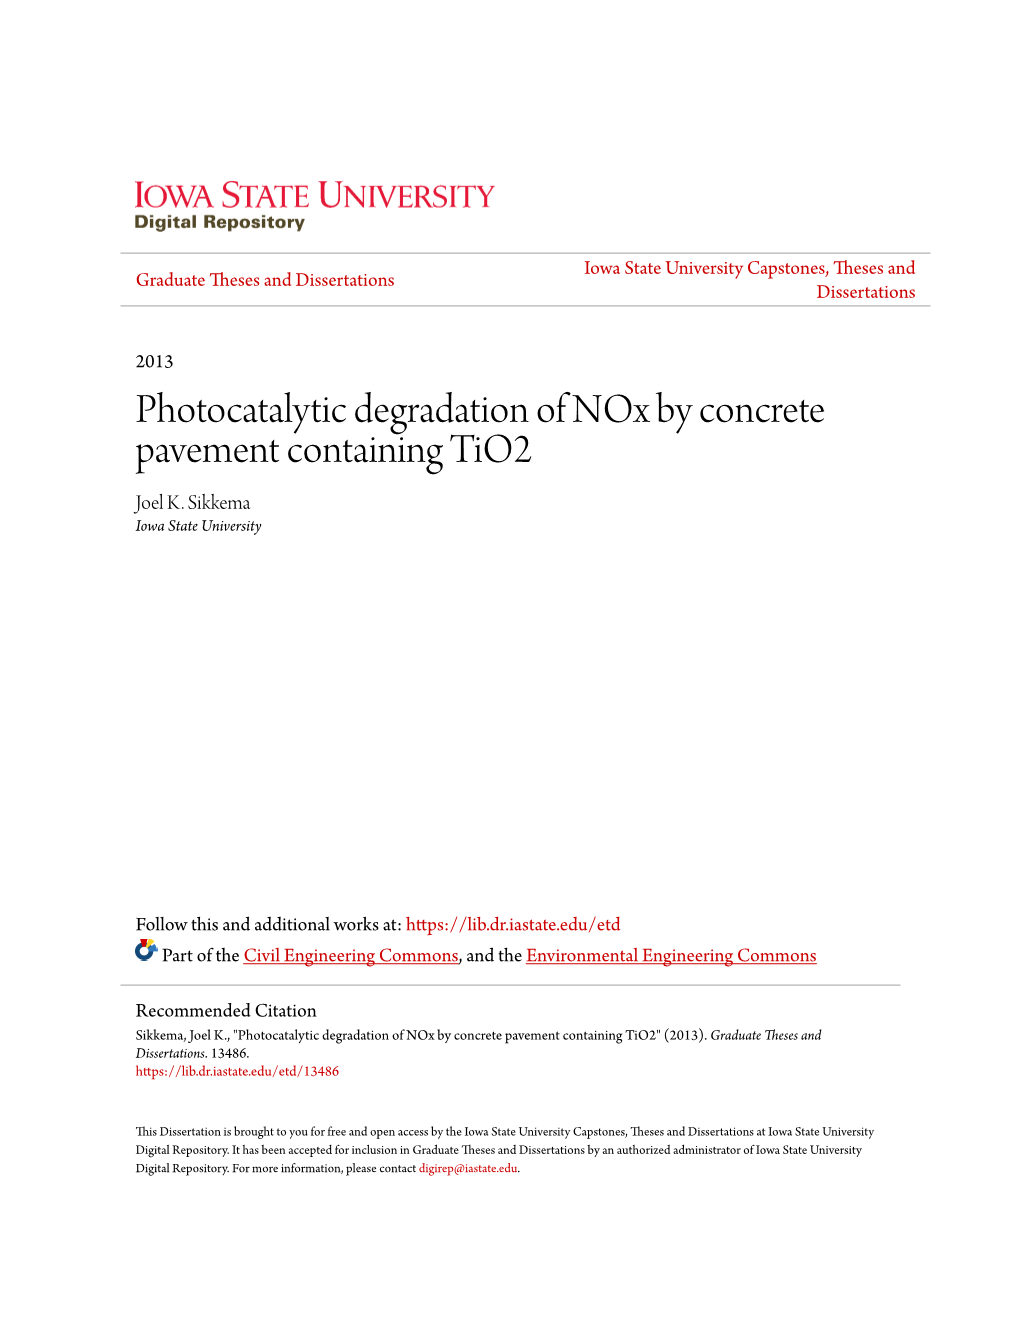 Photocatalytic Degradation of Nox by Concrete Pavement Containing Tio2 Joel K